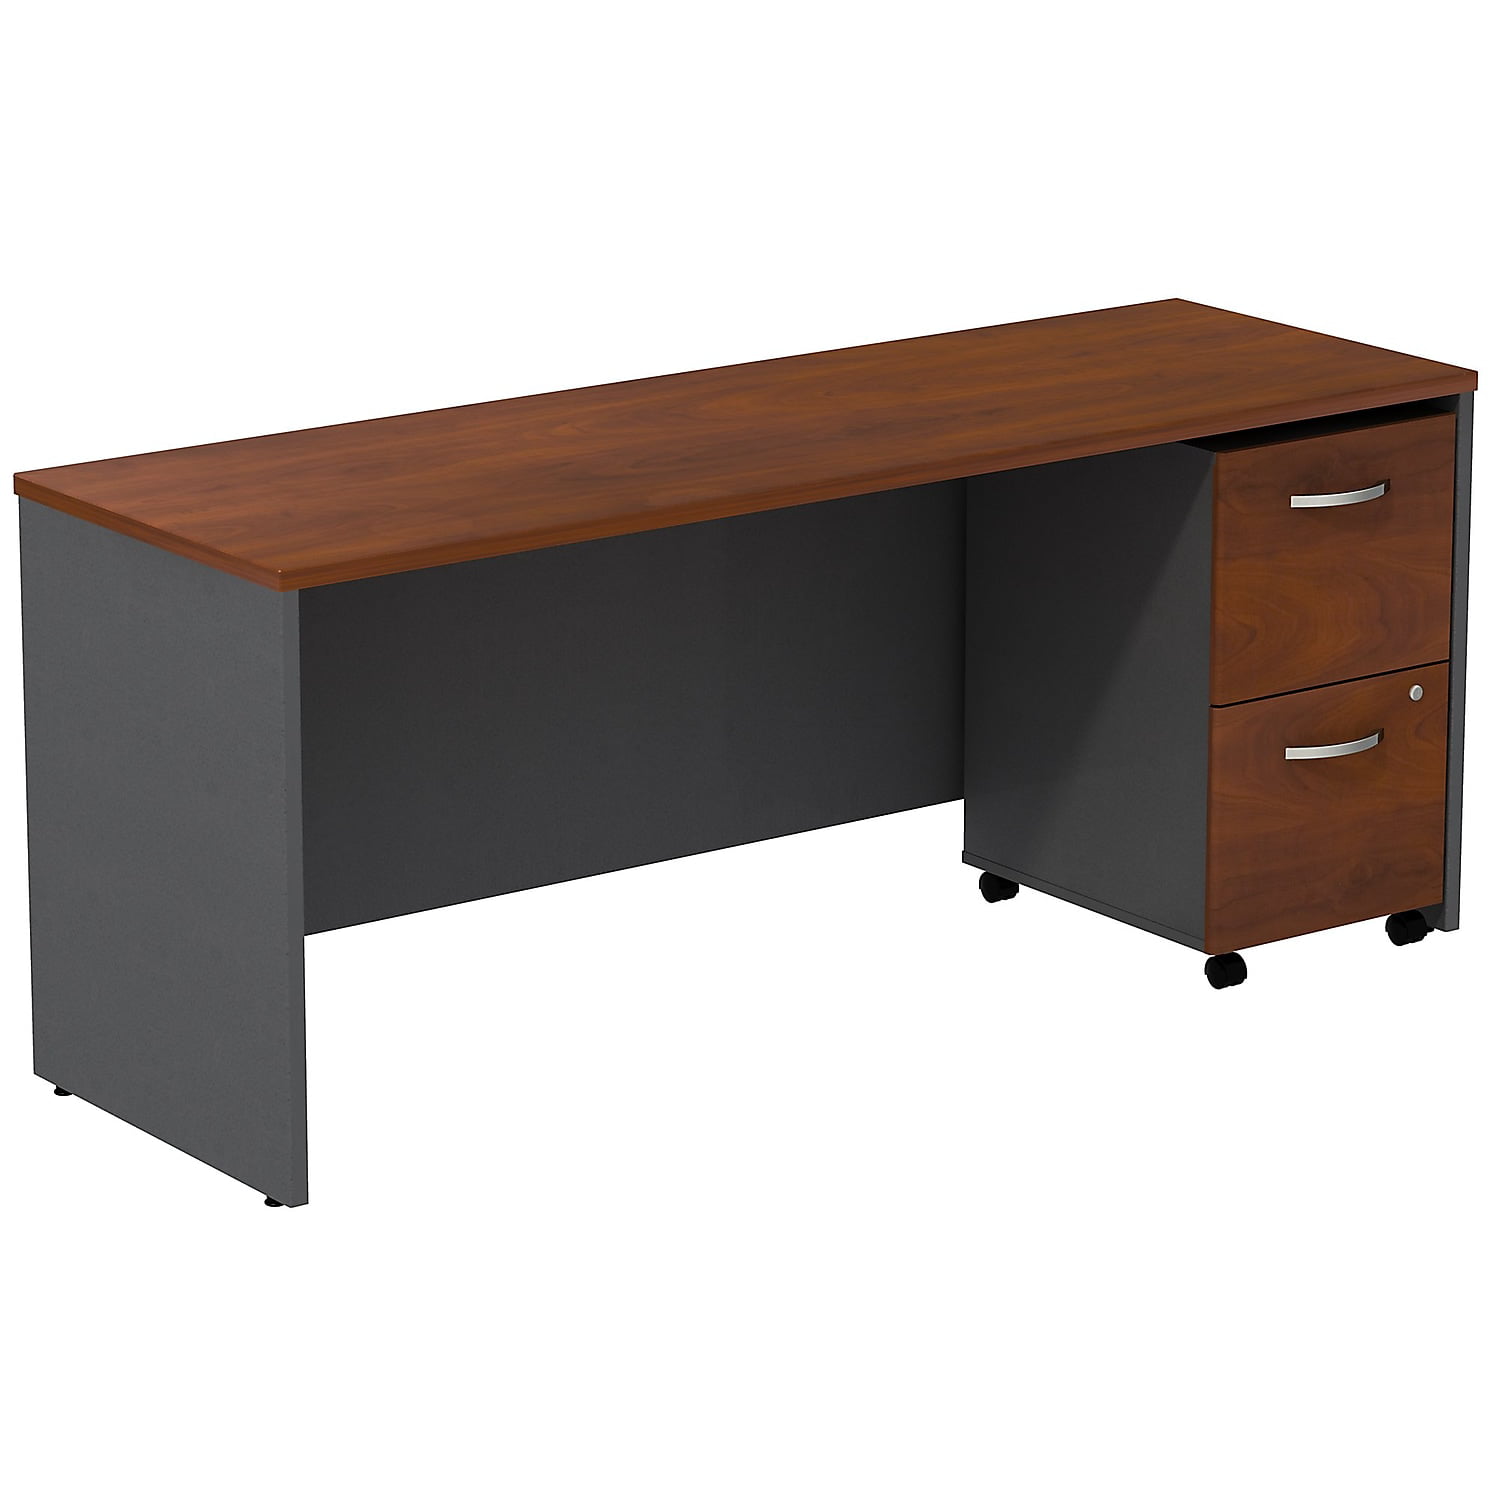 Picture of Bush Business Furniture SRC030HCSU Series C Desk Credenza with 2 Drawer Mobile Pedestal - Hansen Cherry